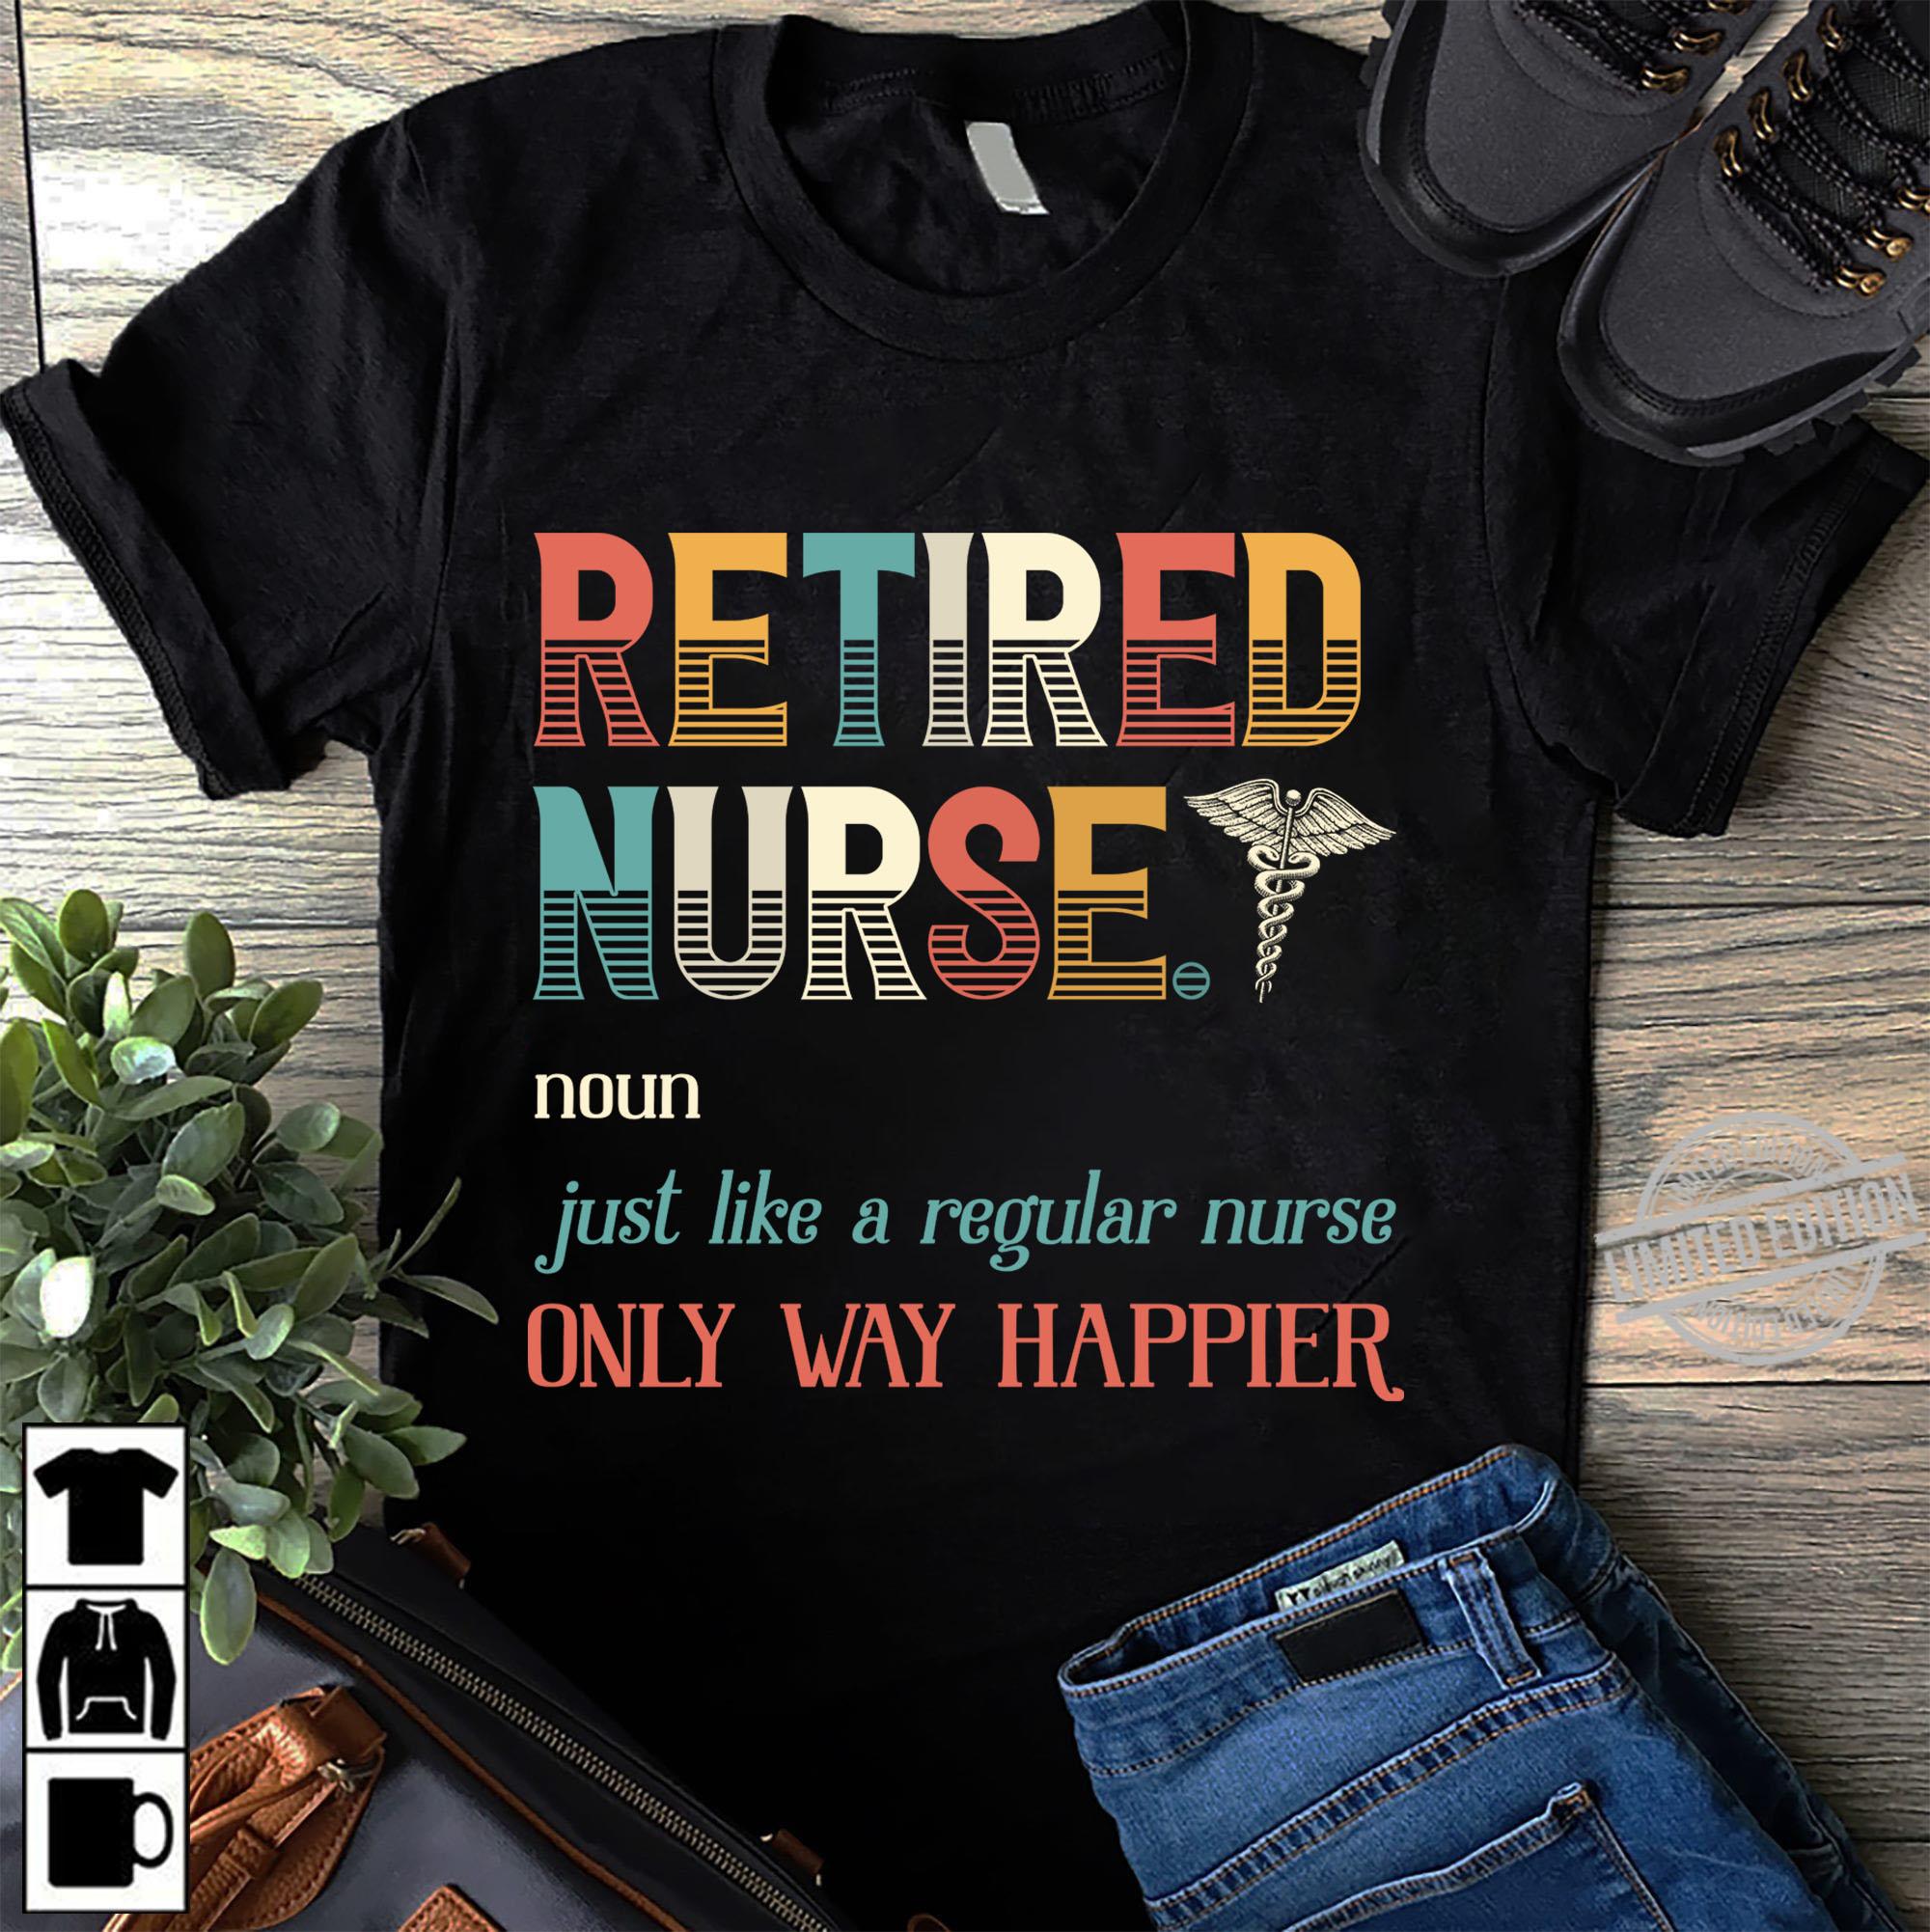 Retired nurse just like a regular nurse only way happier - Nursing the job, T-shirt for retired nurse